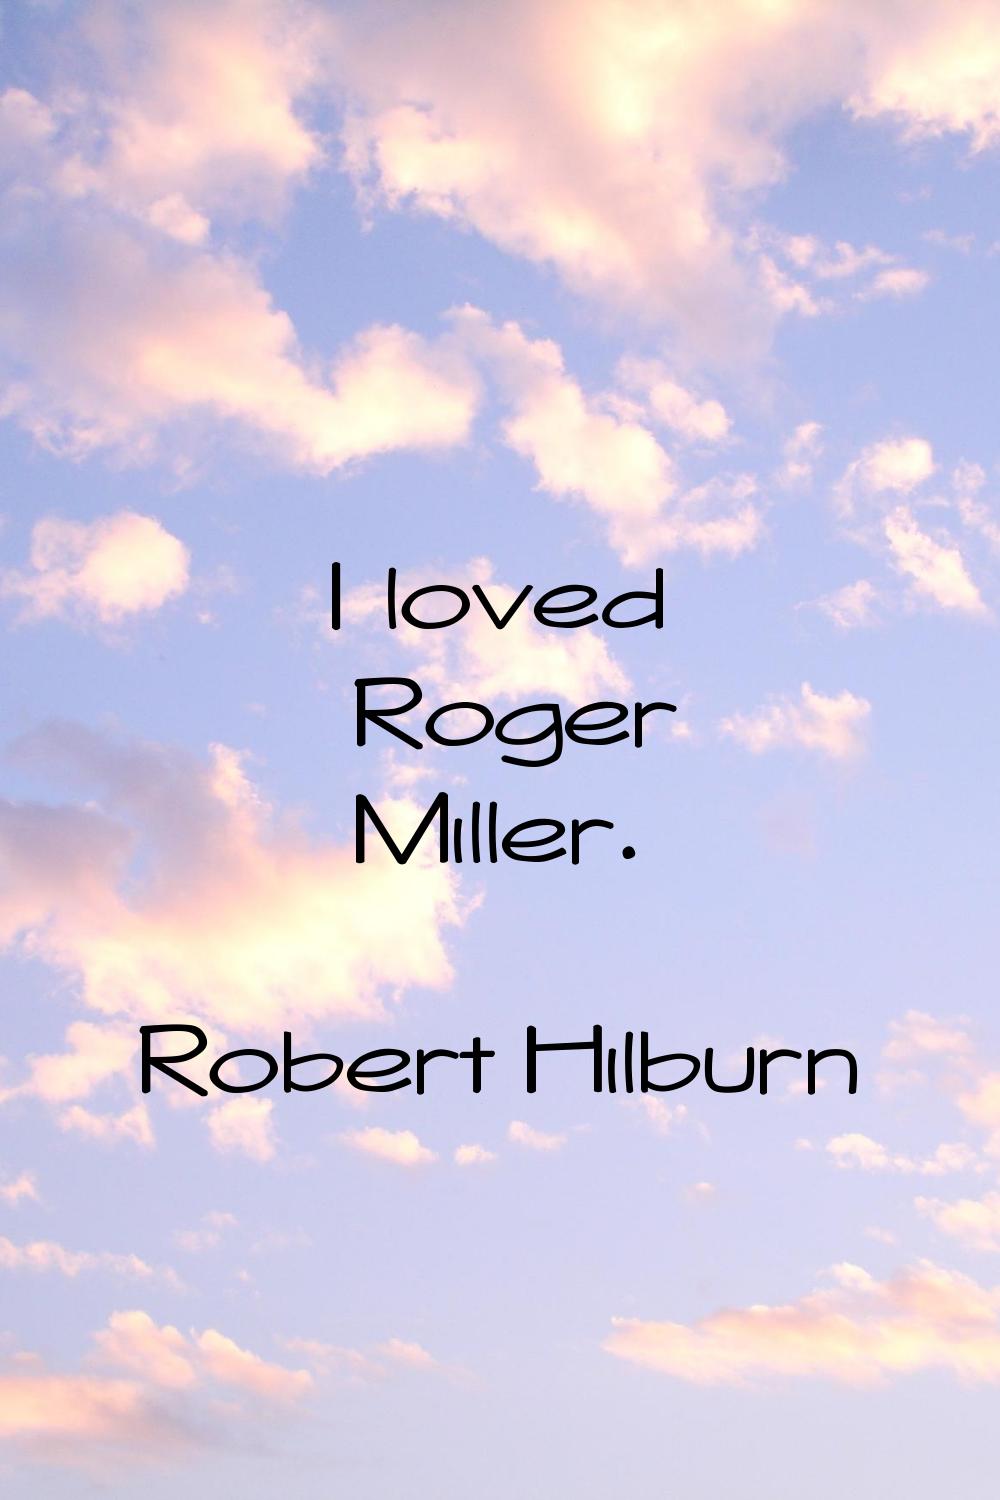 I loved Roger Miller.